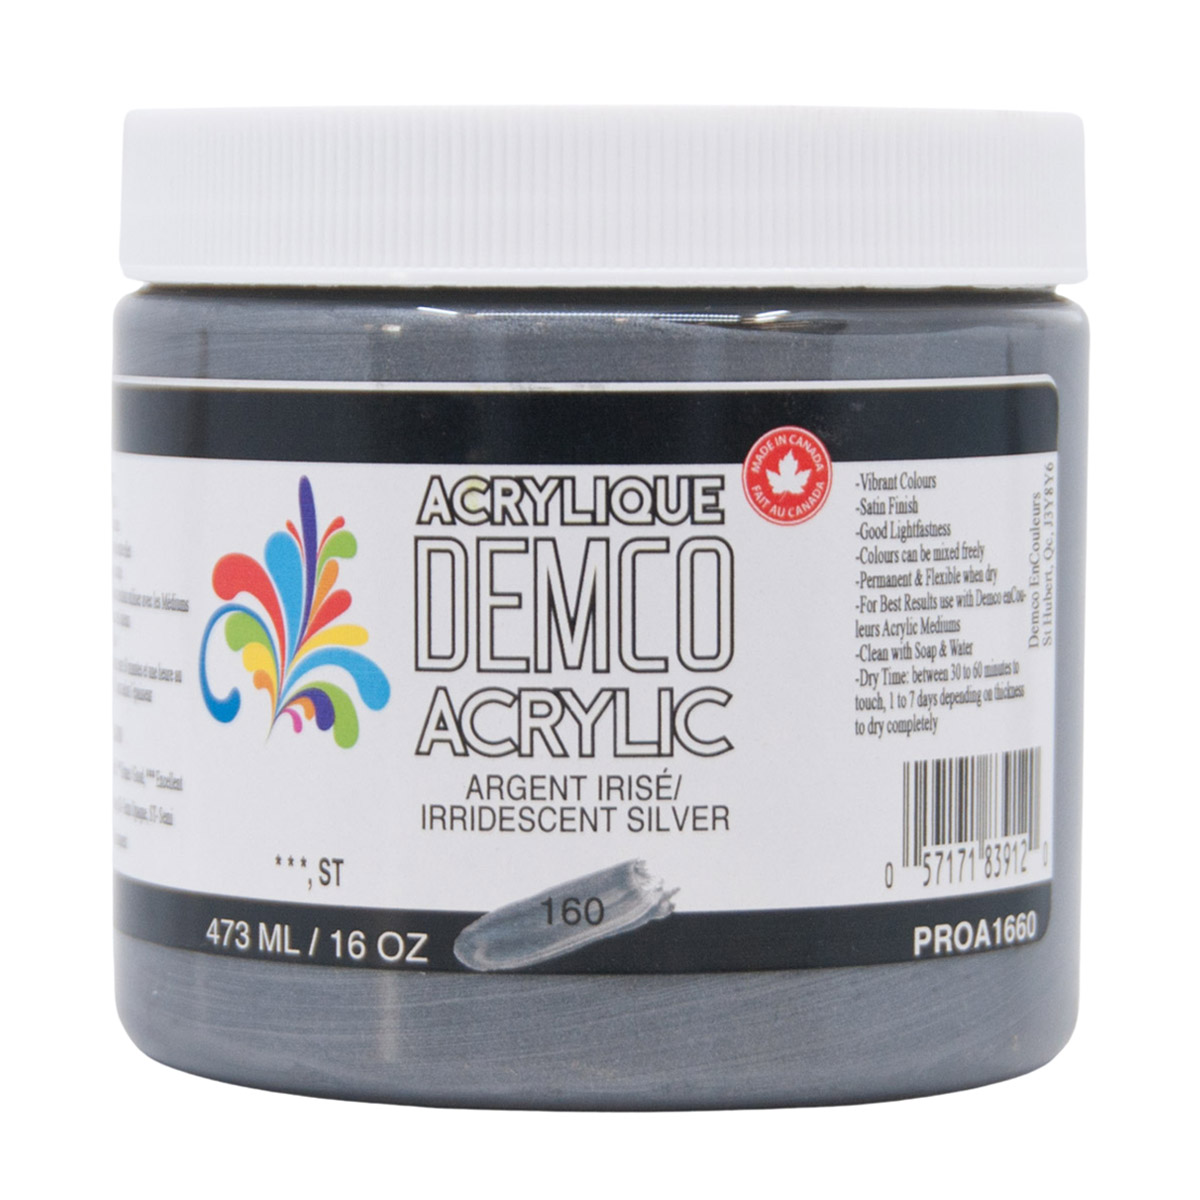 Demco Acrylic Iridescent Silver 473ml/16oz